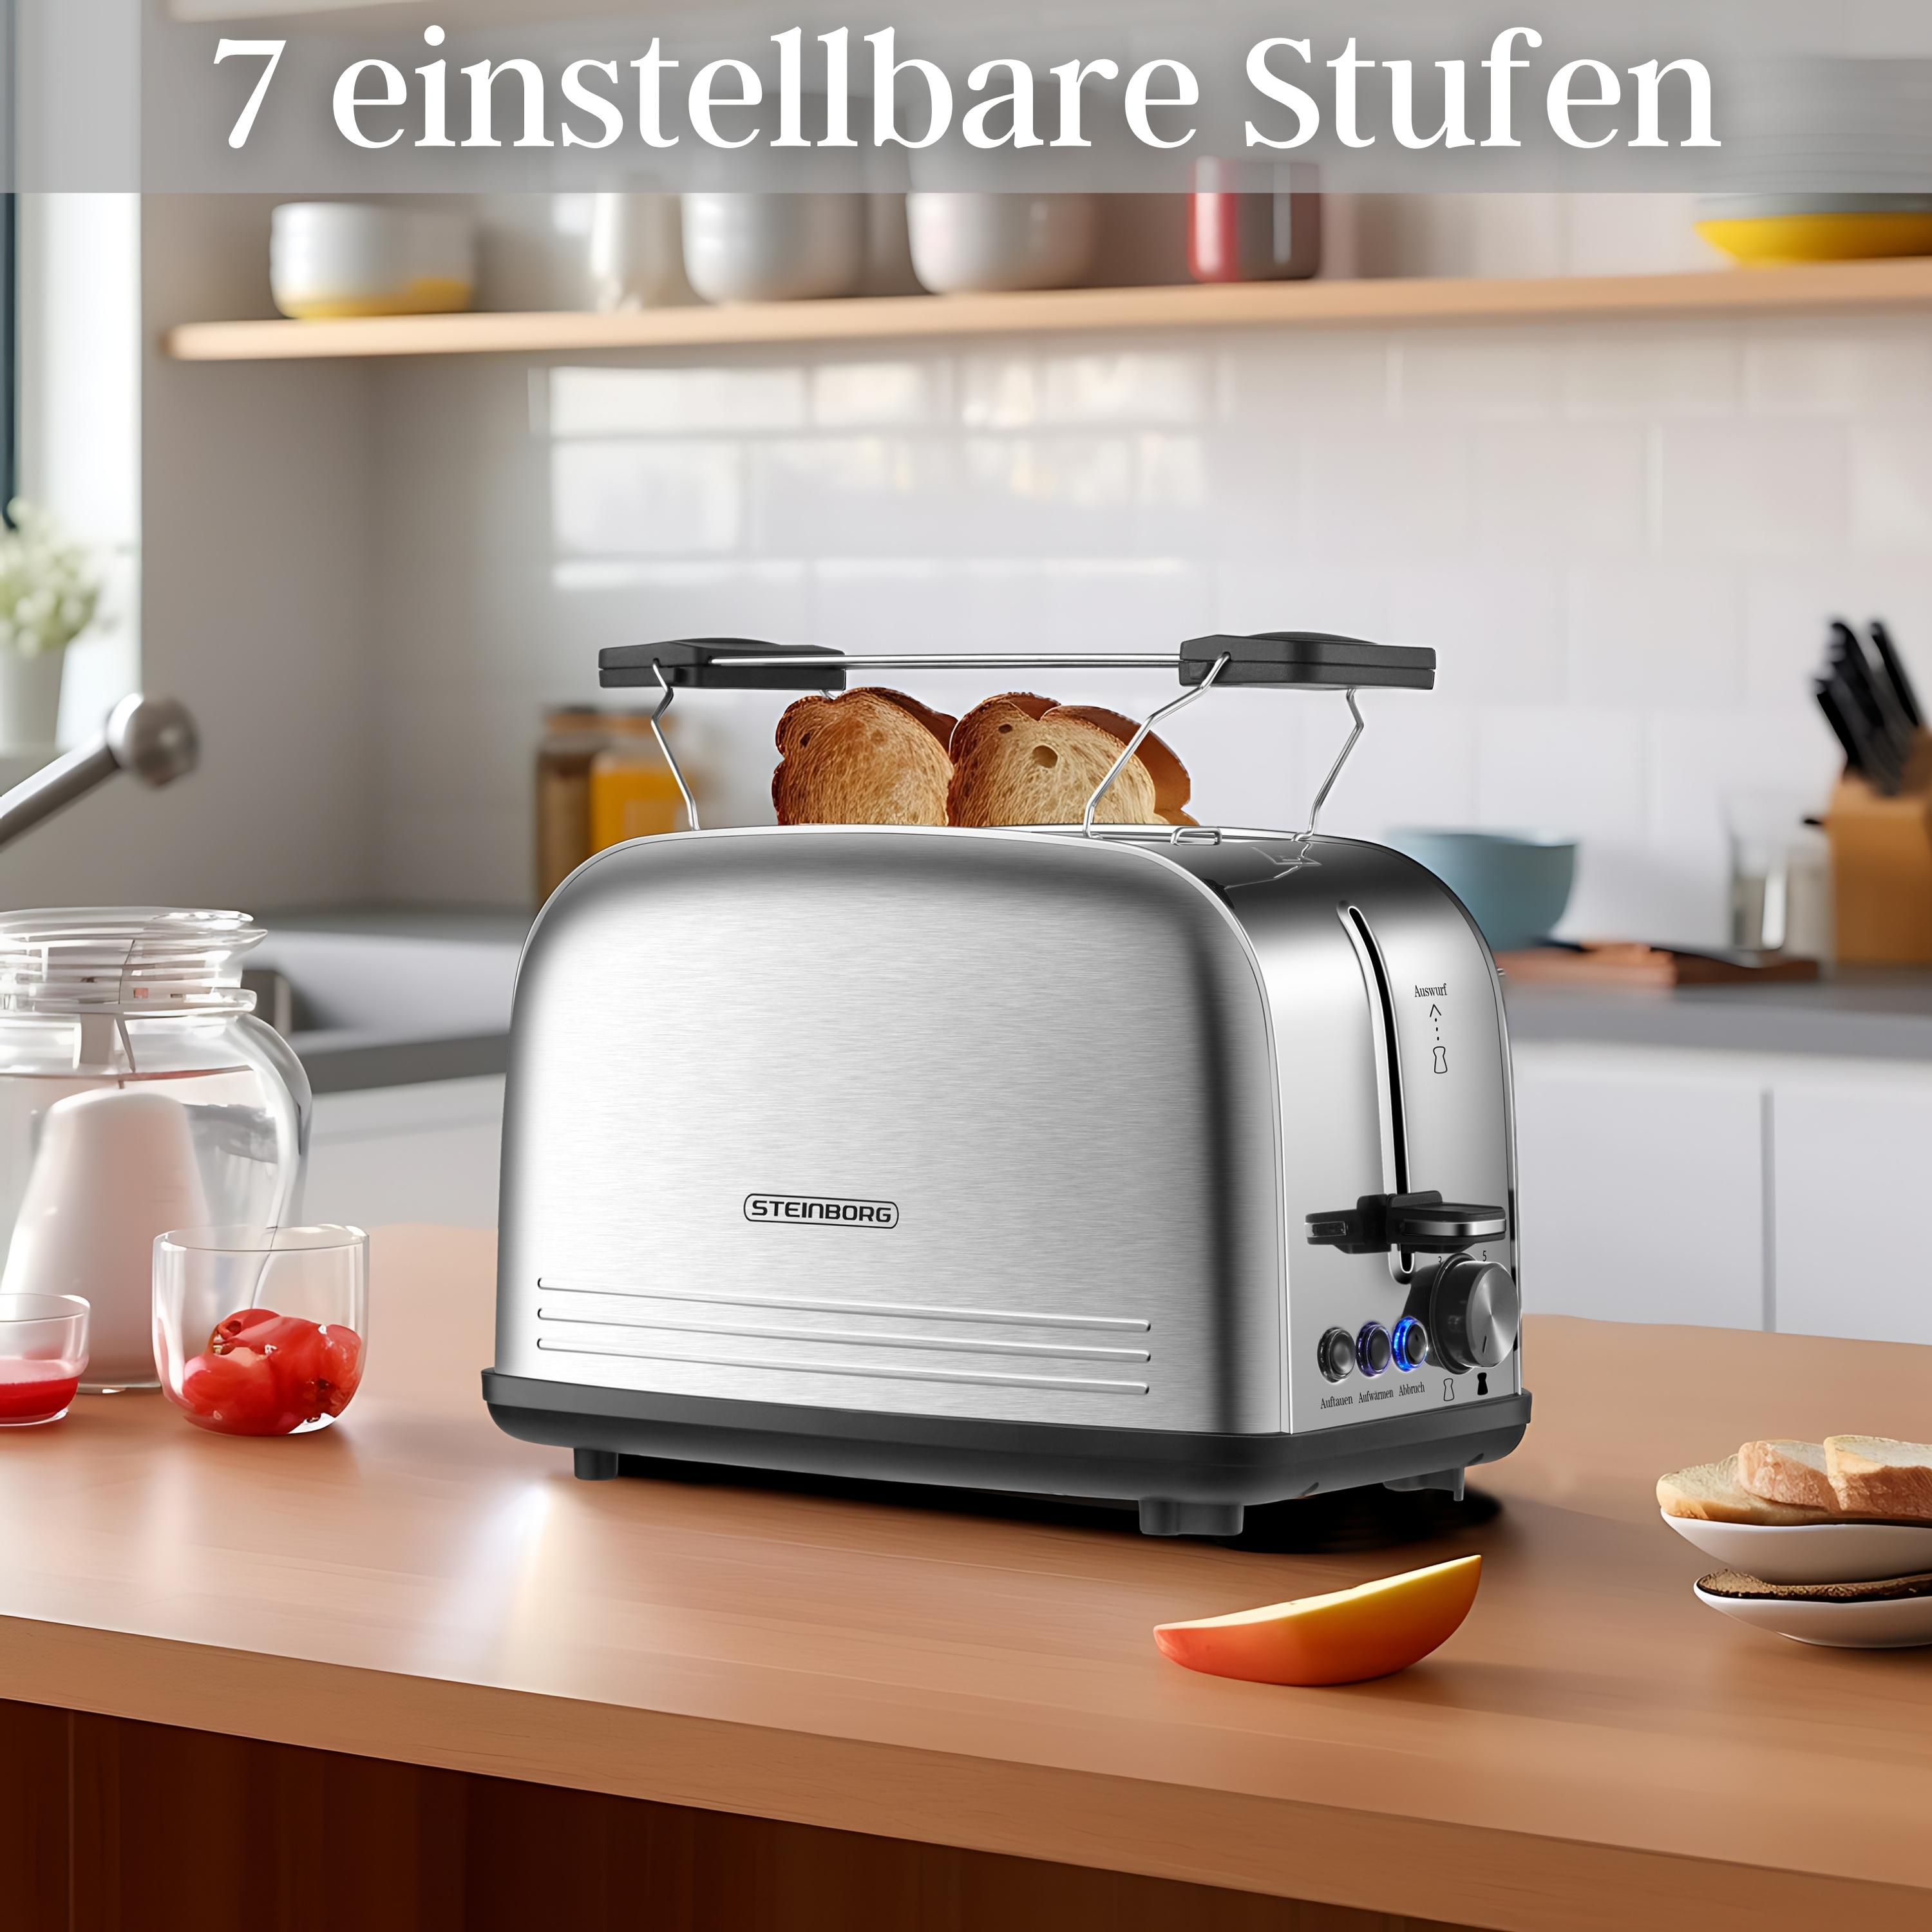 Schlitze: SB-2071 (850 2) Watt, STEINBORG Edelstahl Toaster